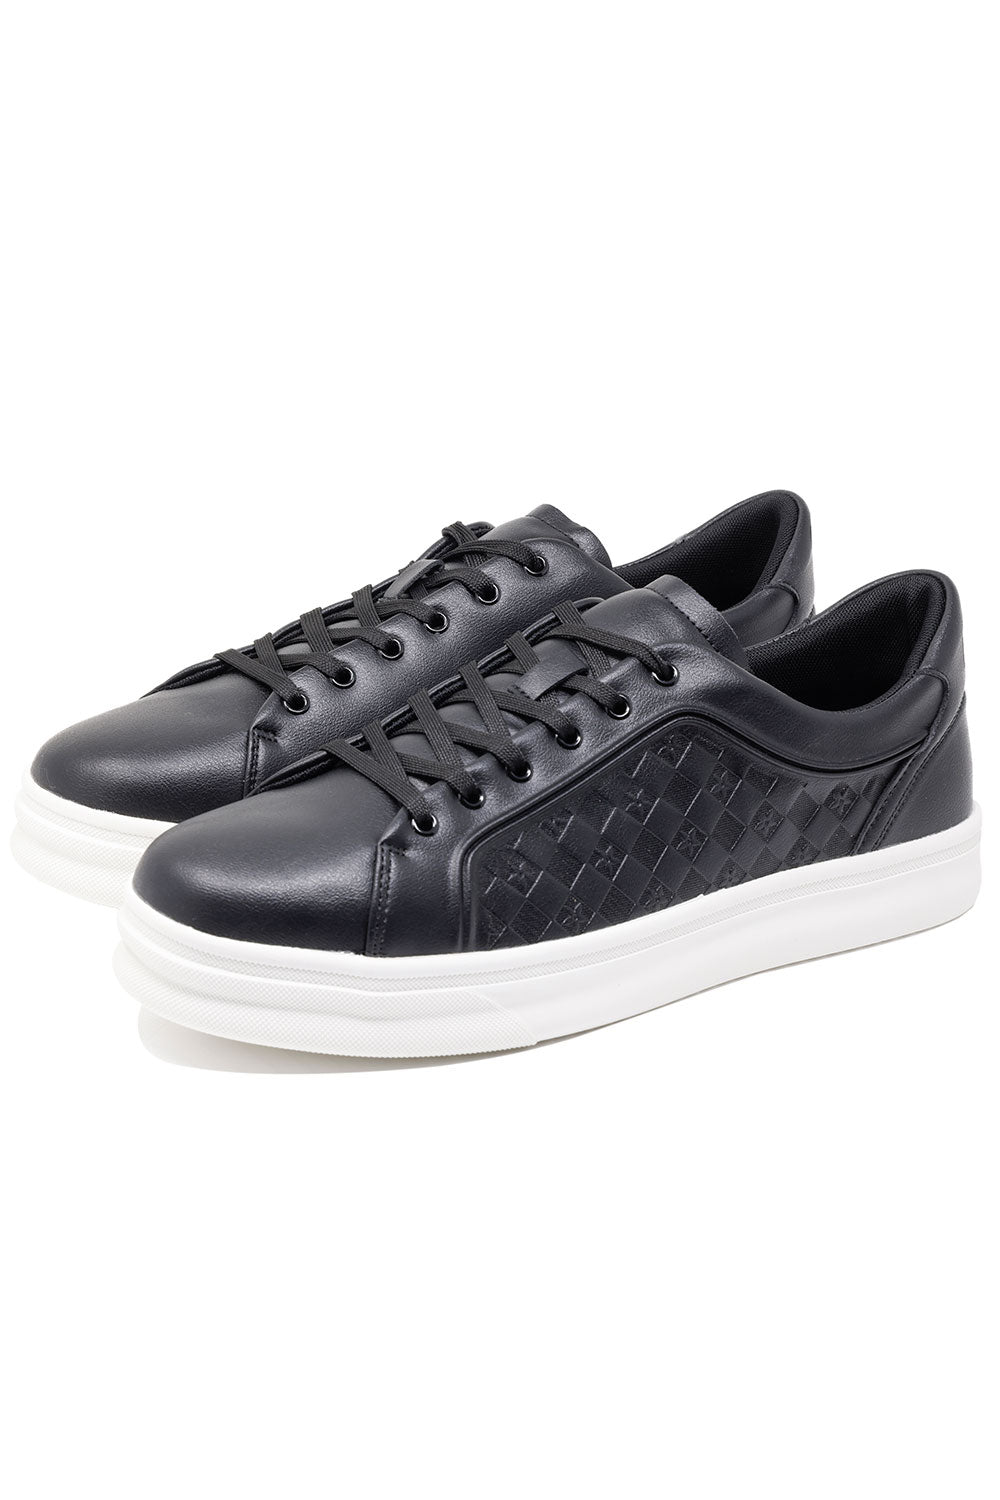 Barabas Men's Checkered Pattern Premium Leather Sneakers 4SK04 Black